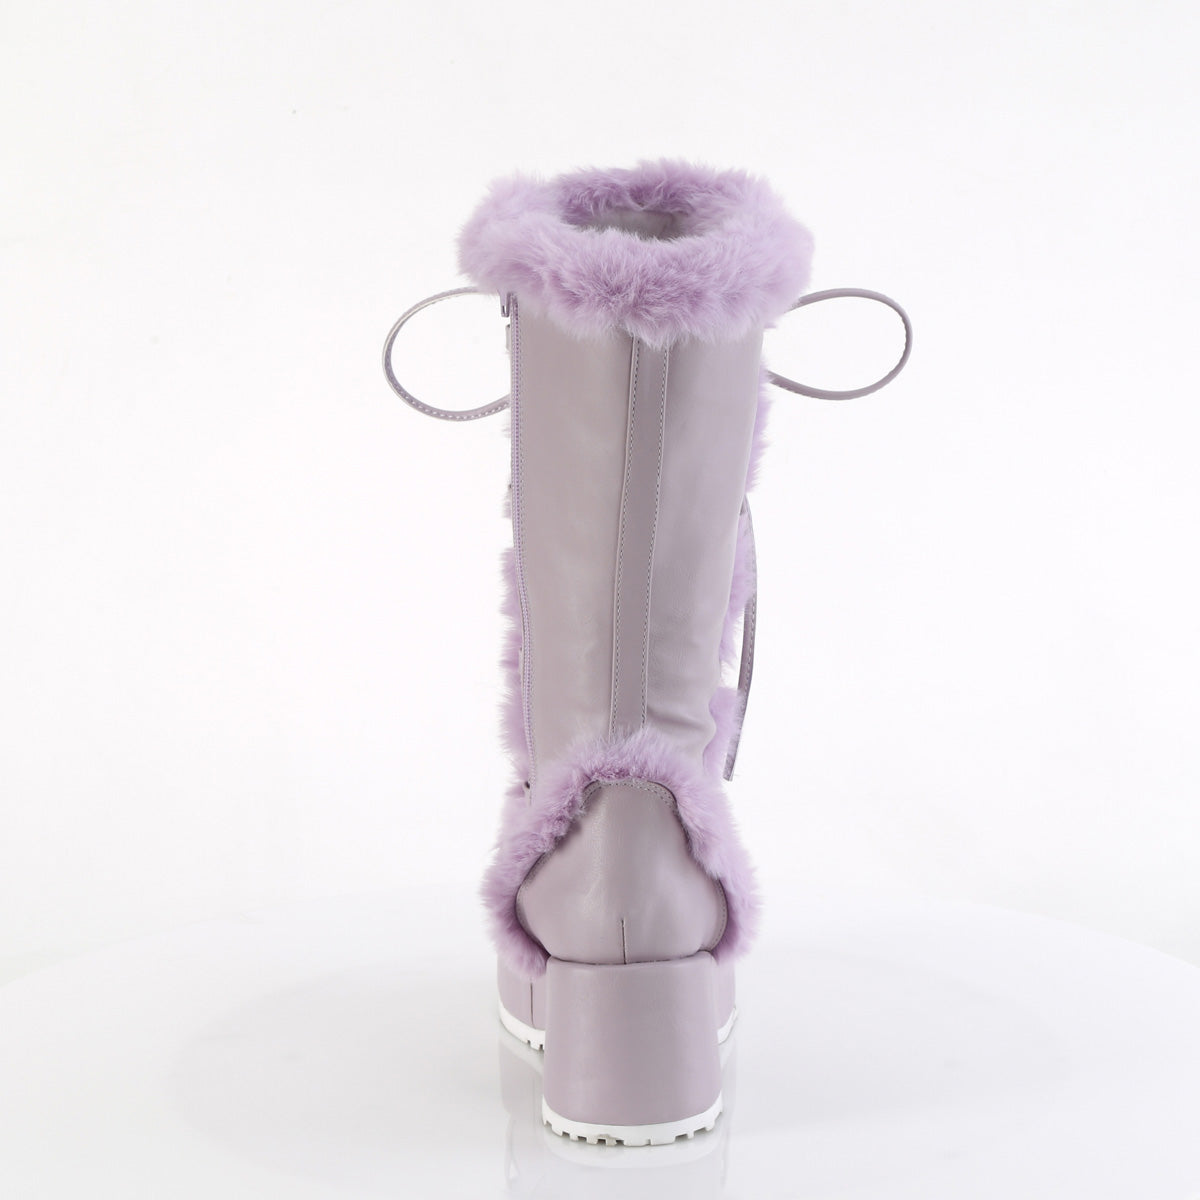 CUBBY-311 Demonia Lavender Vegan Leather Women's Mid-Calf & Knee High Boots [Demonia Cult Alternative Footwear]